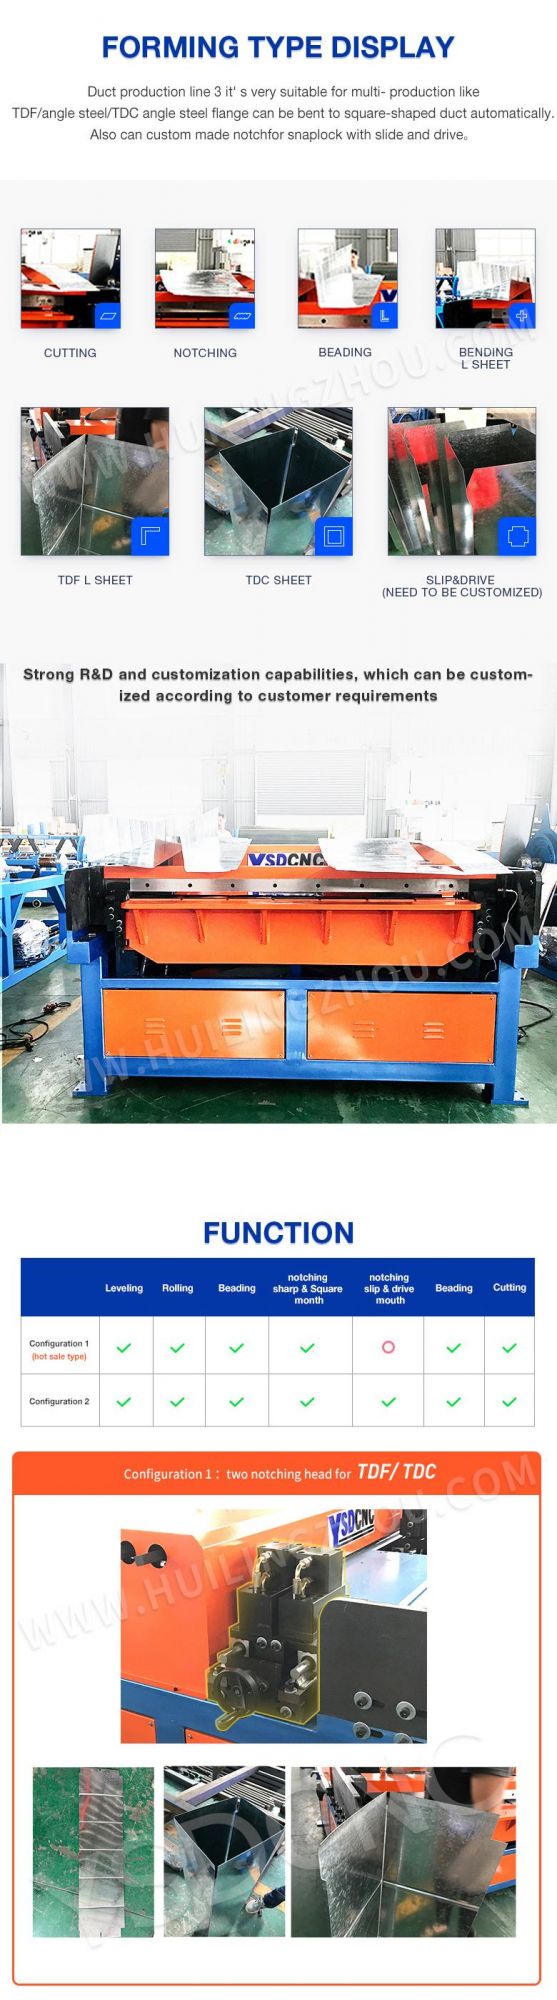 Ysdcnc Brand Manufacturing Machine Rectangular 3 Air Duct Auto Line III